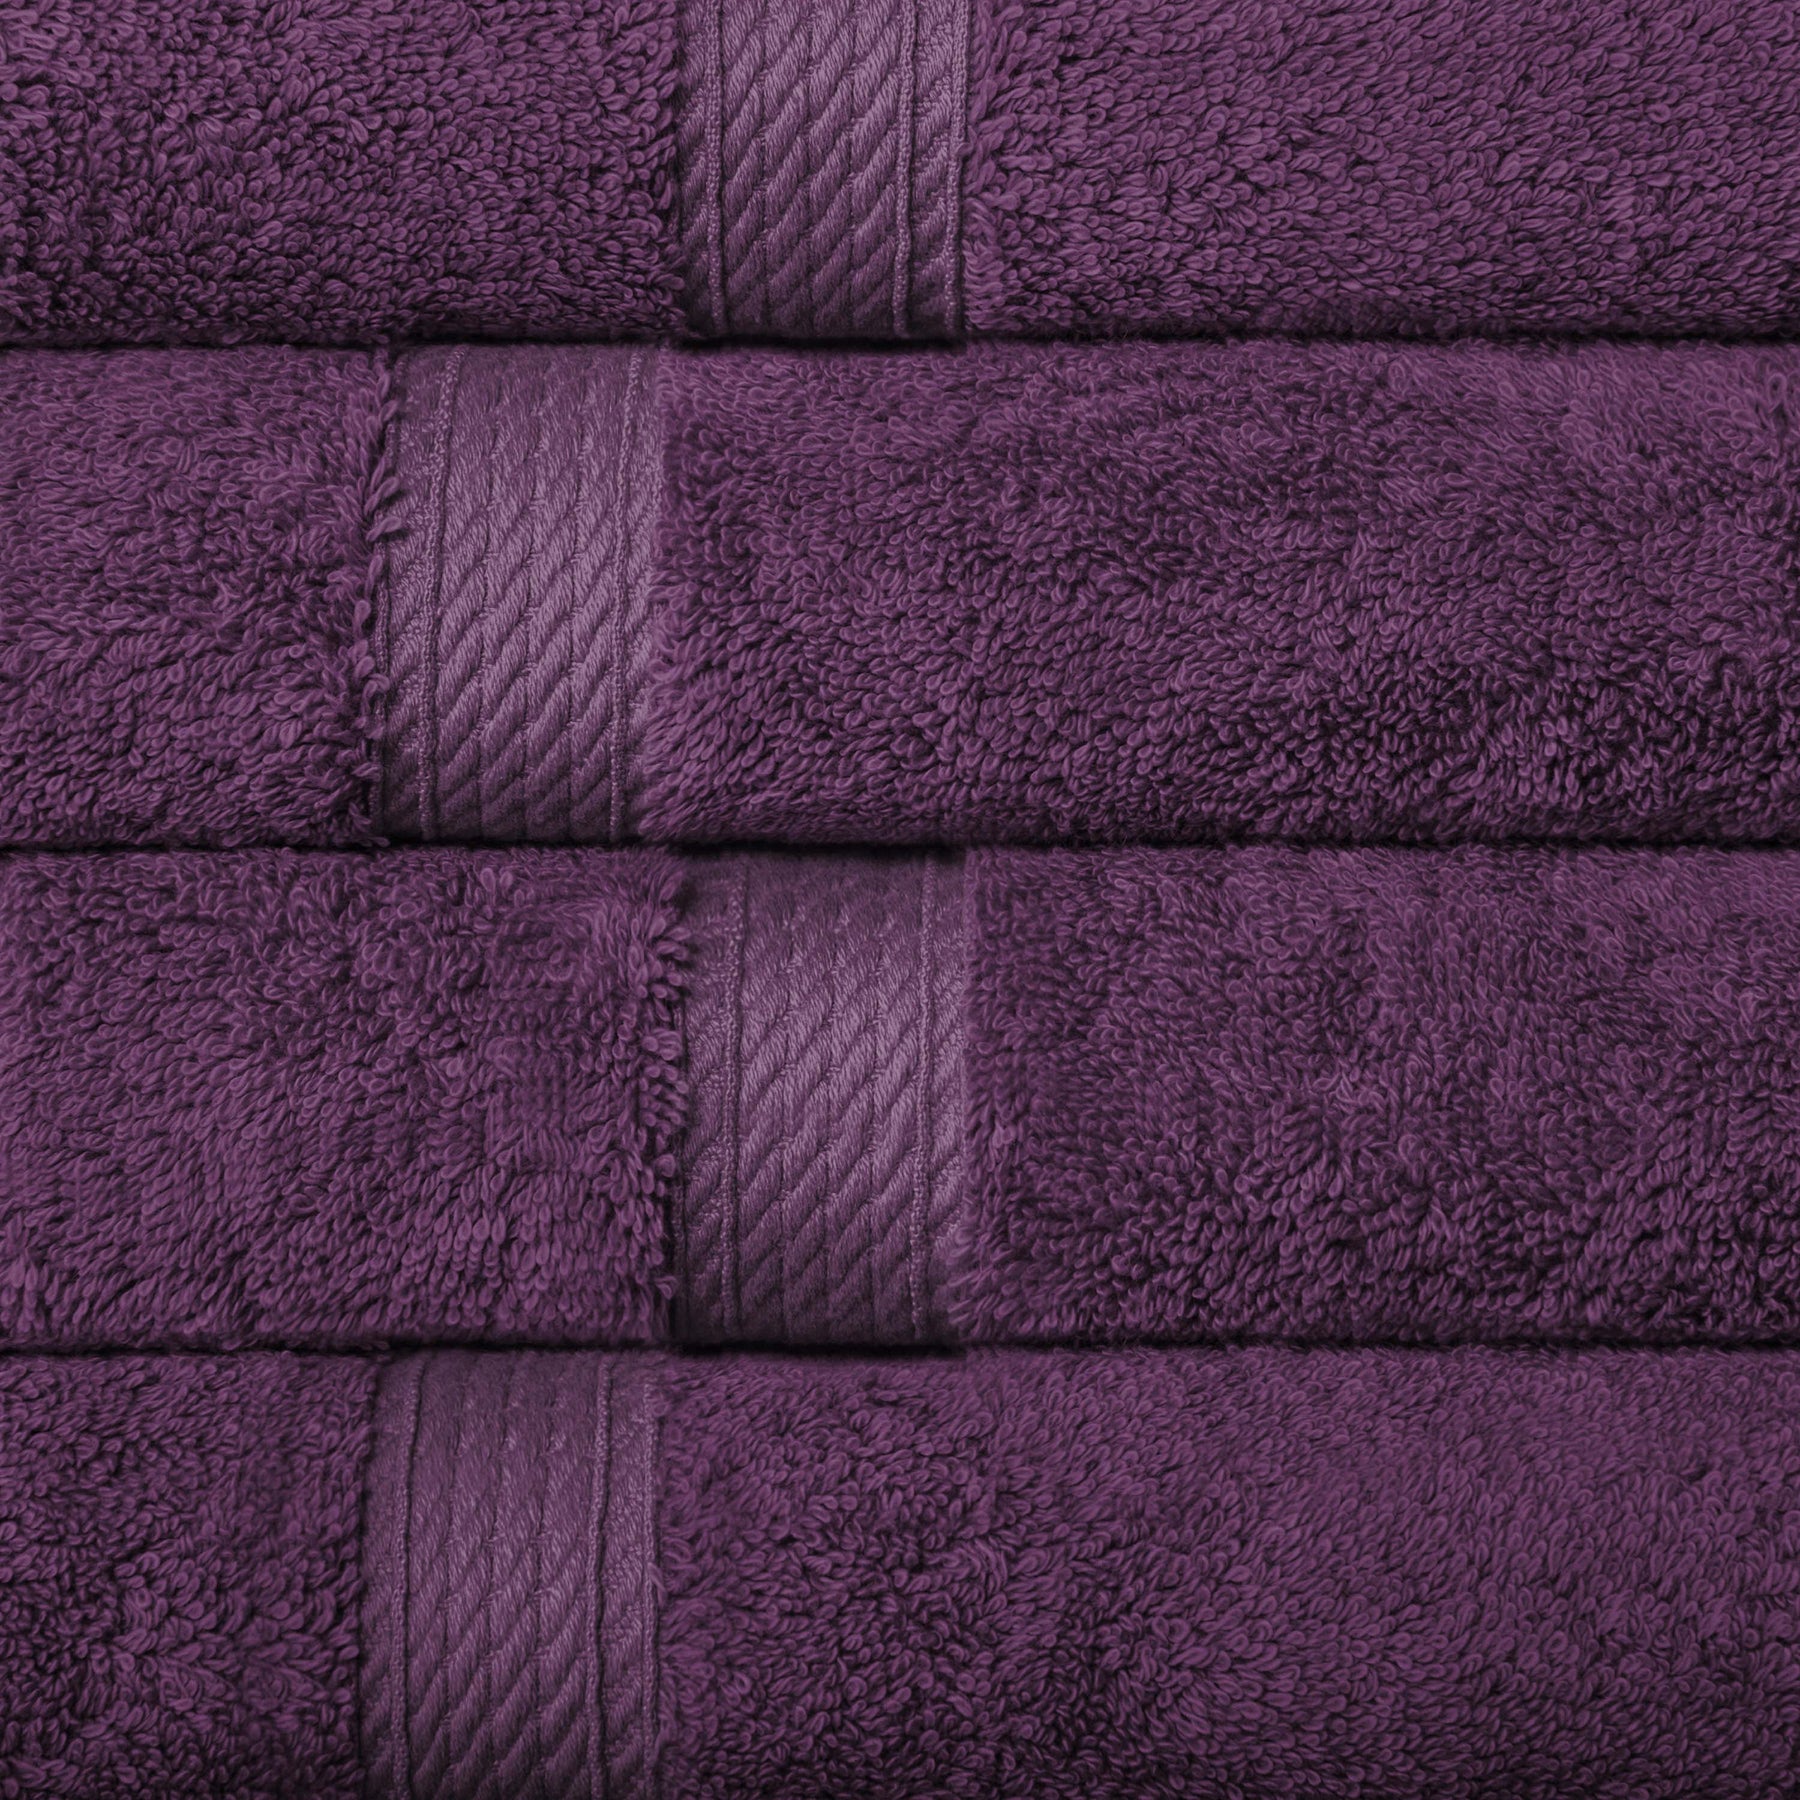 Superior Egyptian Cotton Plush Heavyweight Absorbent Luxury Soft 9-Piece Towel Set - Plum